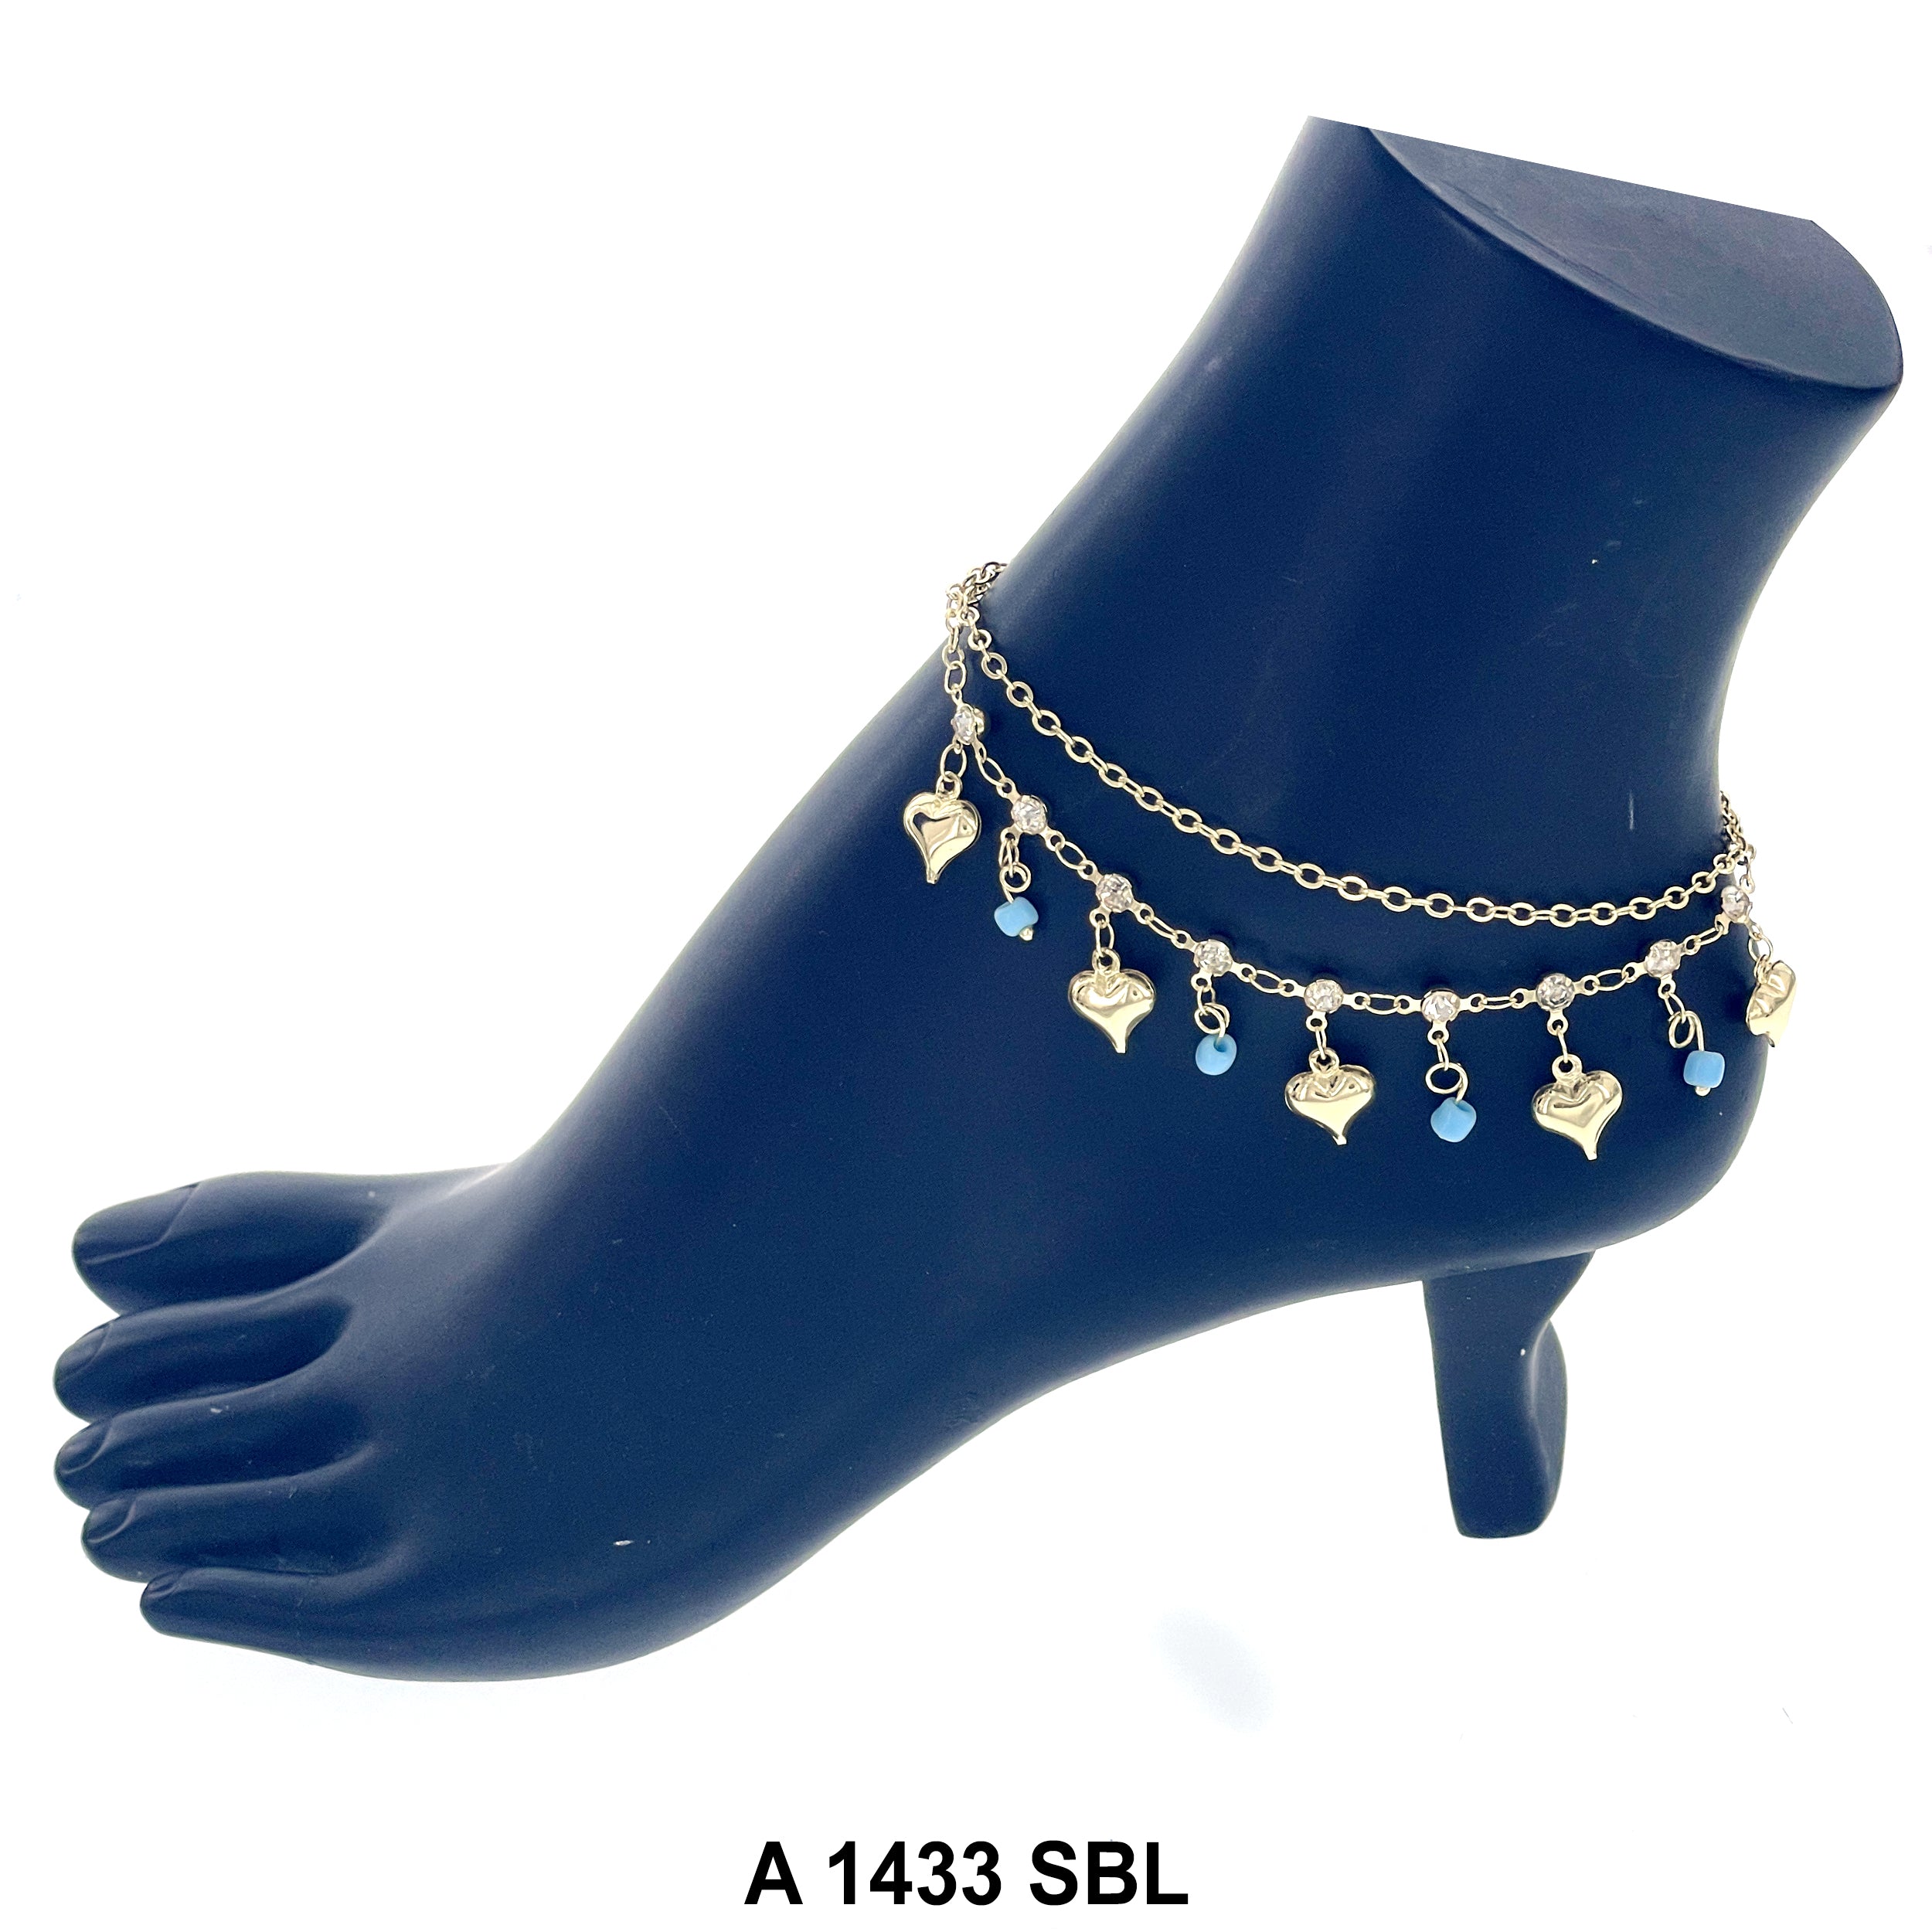 Fashion Anklets A 1433 SBL